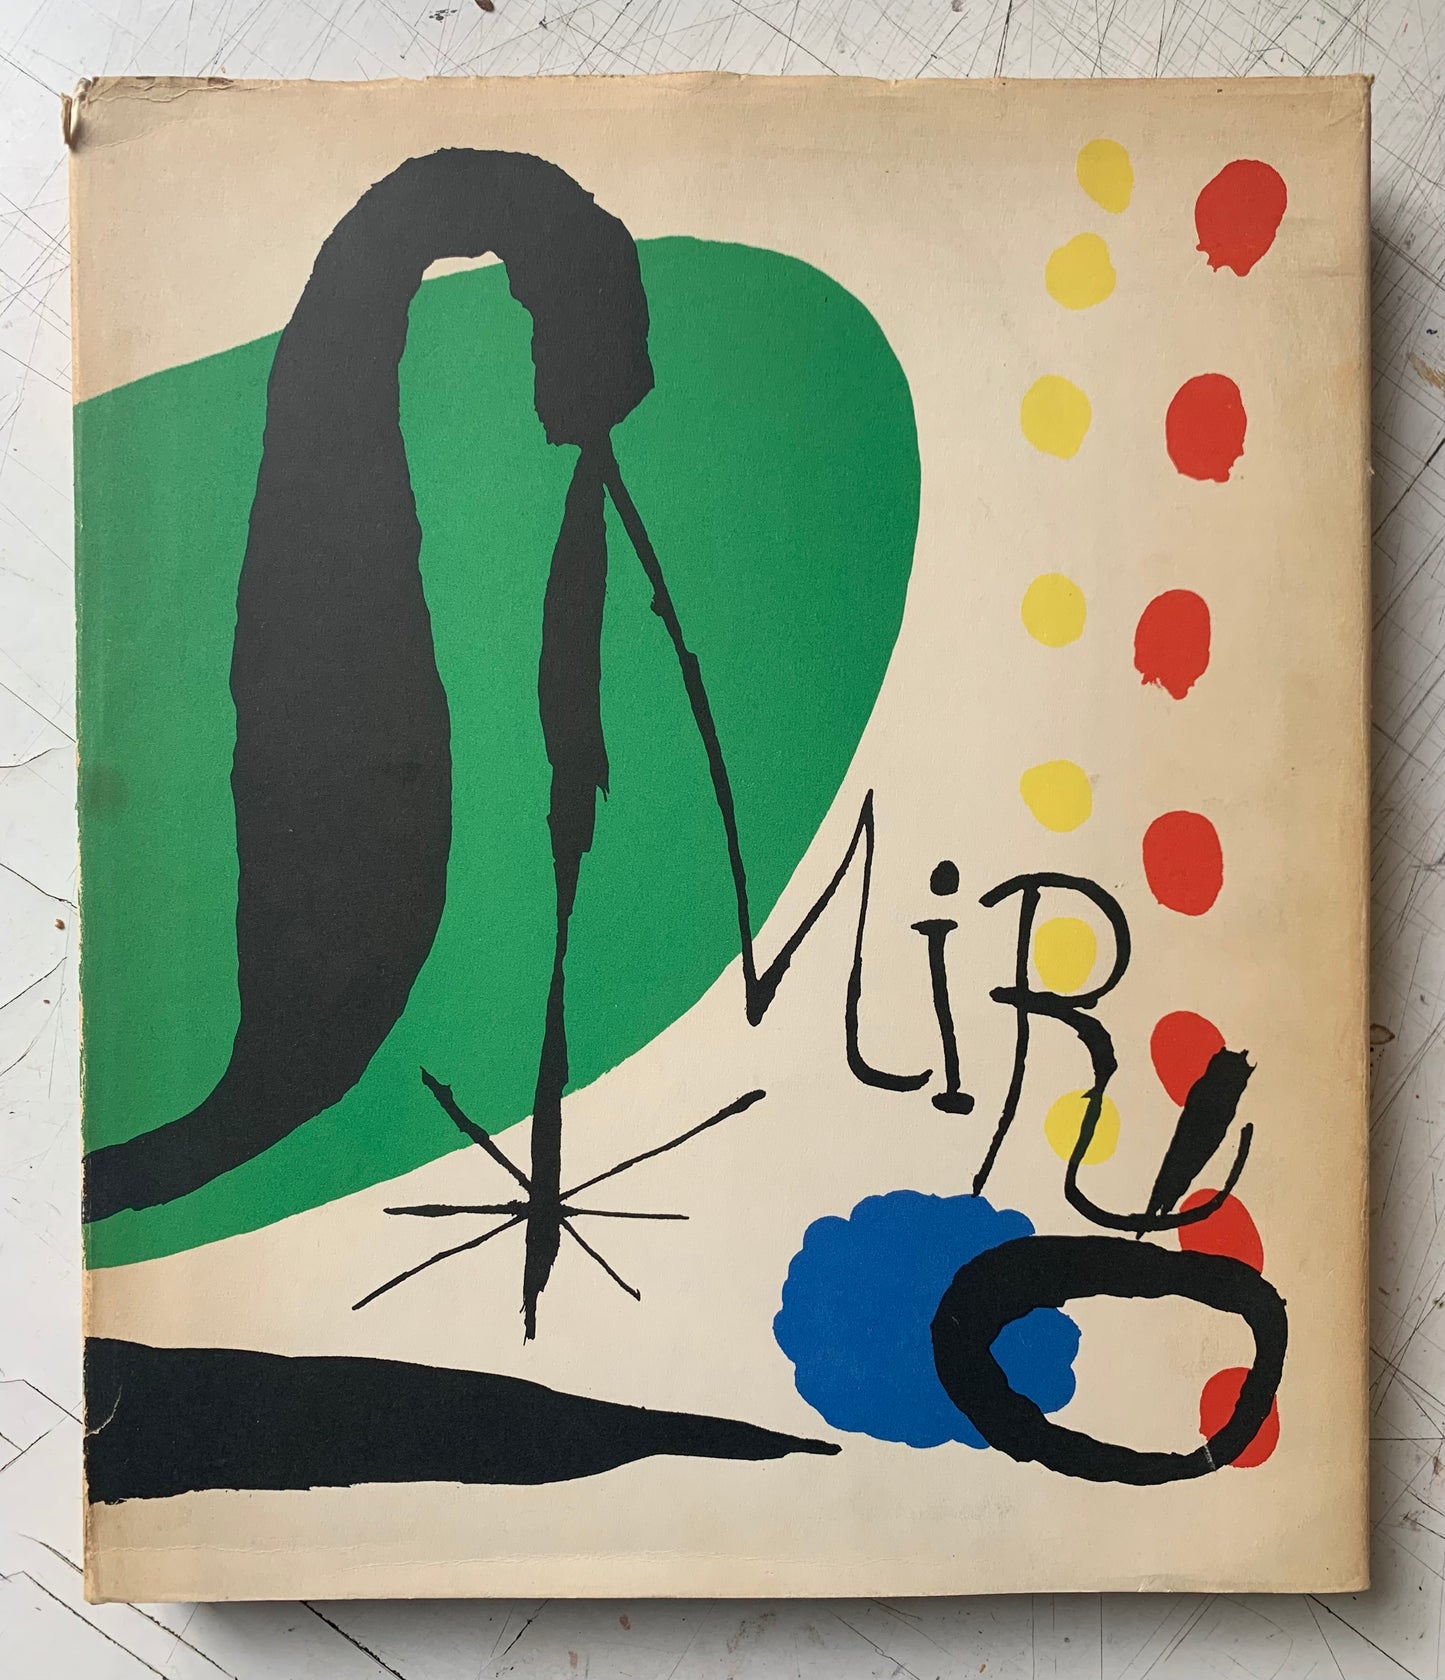 Joan Miró, 'His Graphic Work'